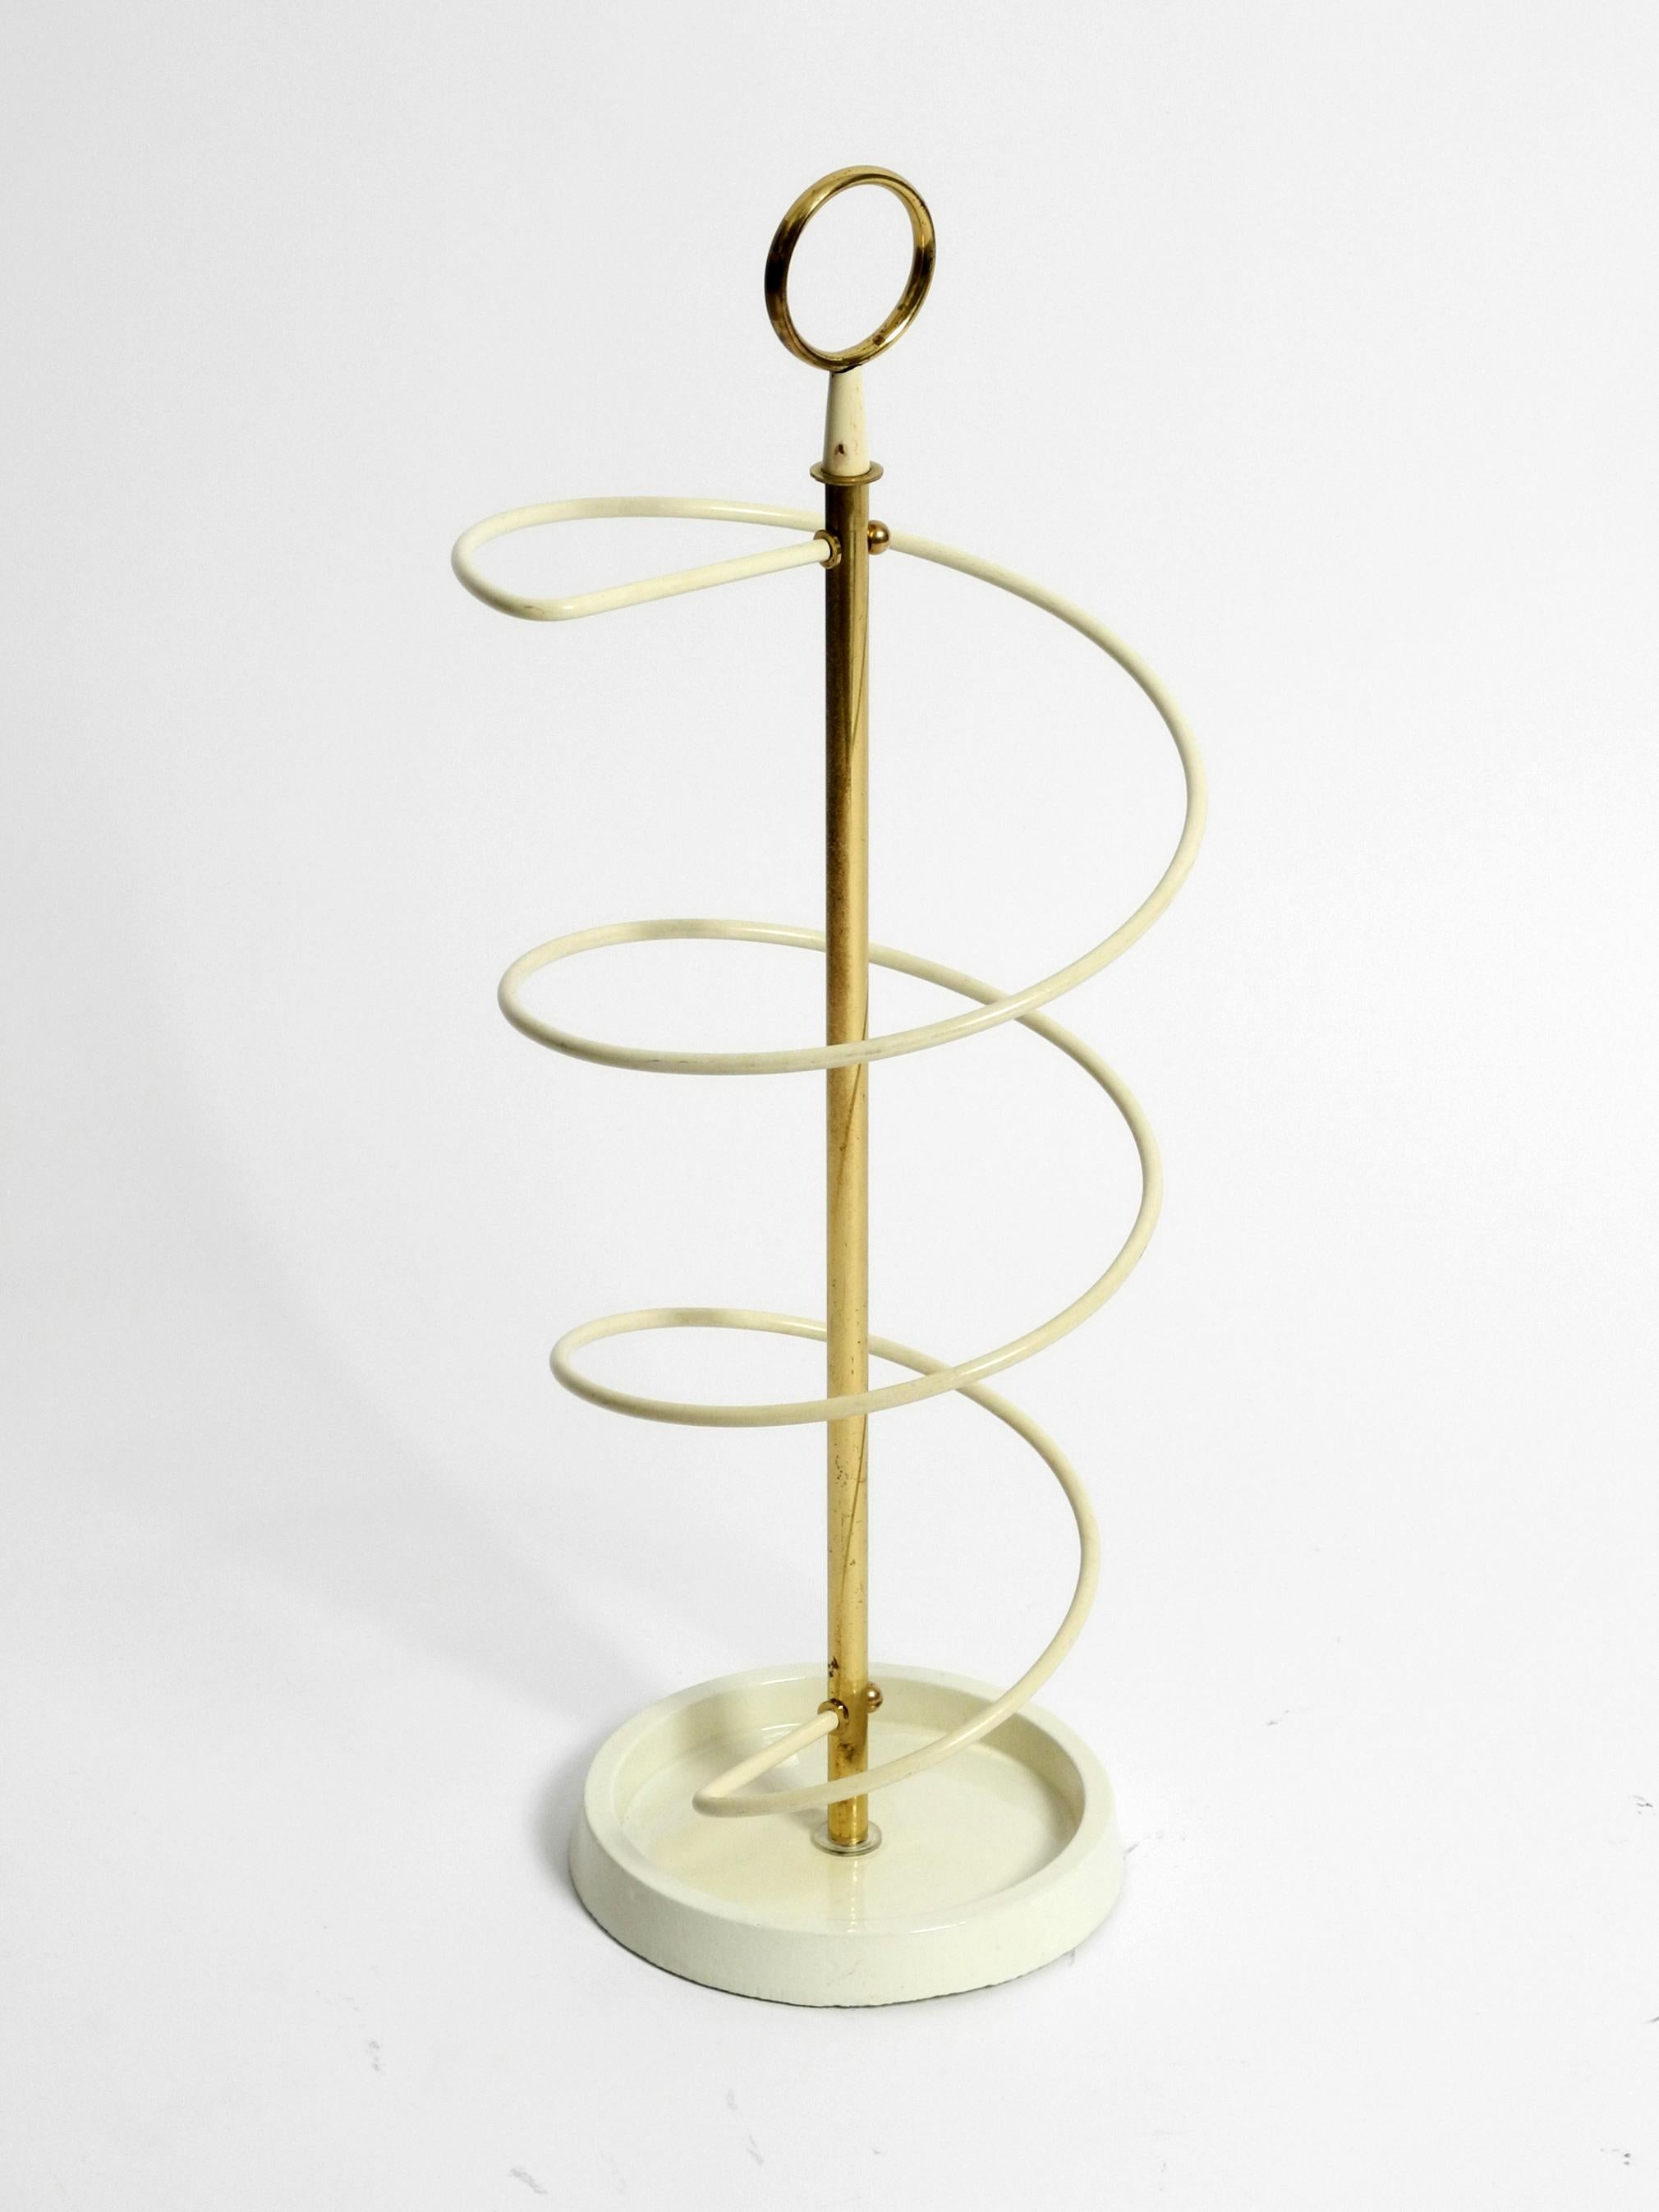 Extraordinary Rare Mid-Century Modern Umbrella Stand in String Helix Design In Good Condition For Sale In München, DE